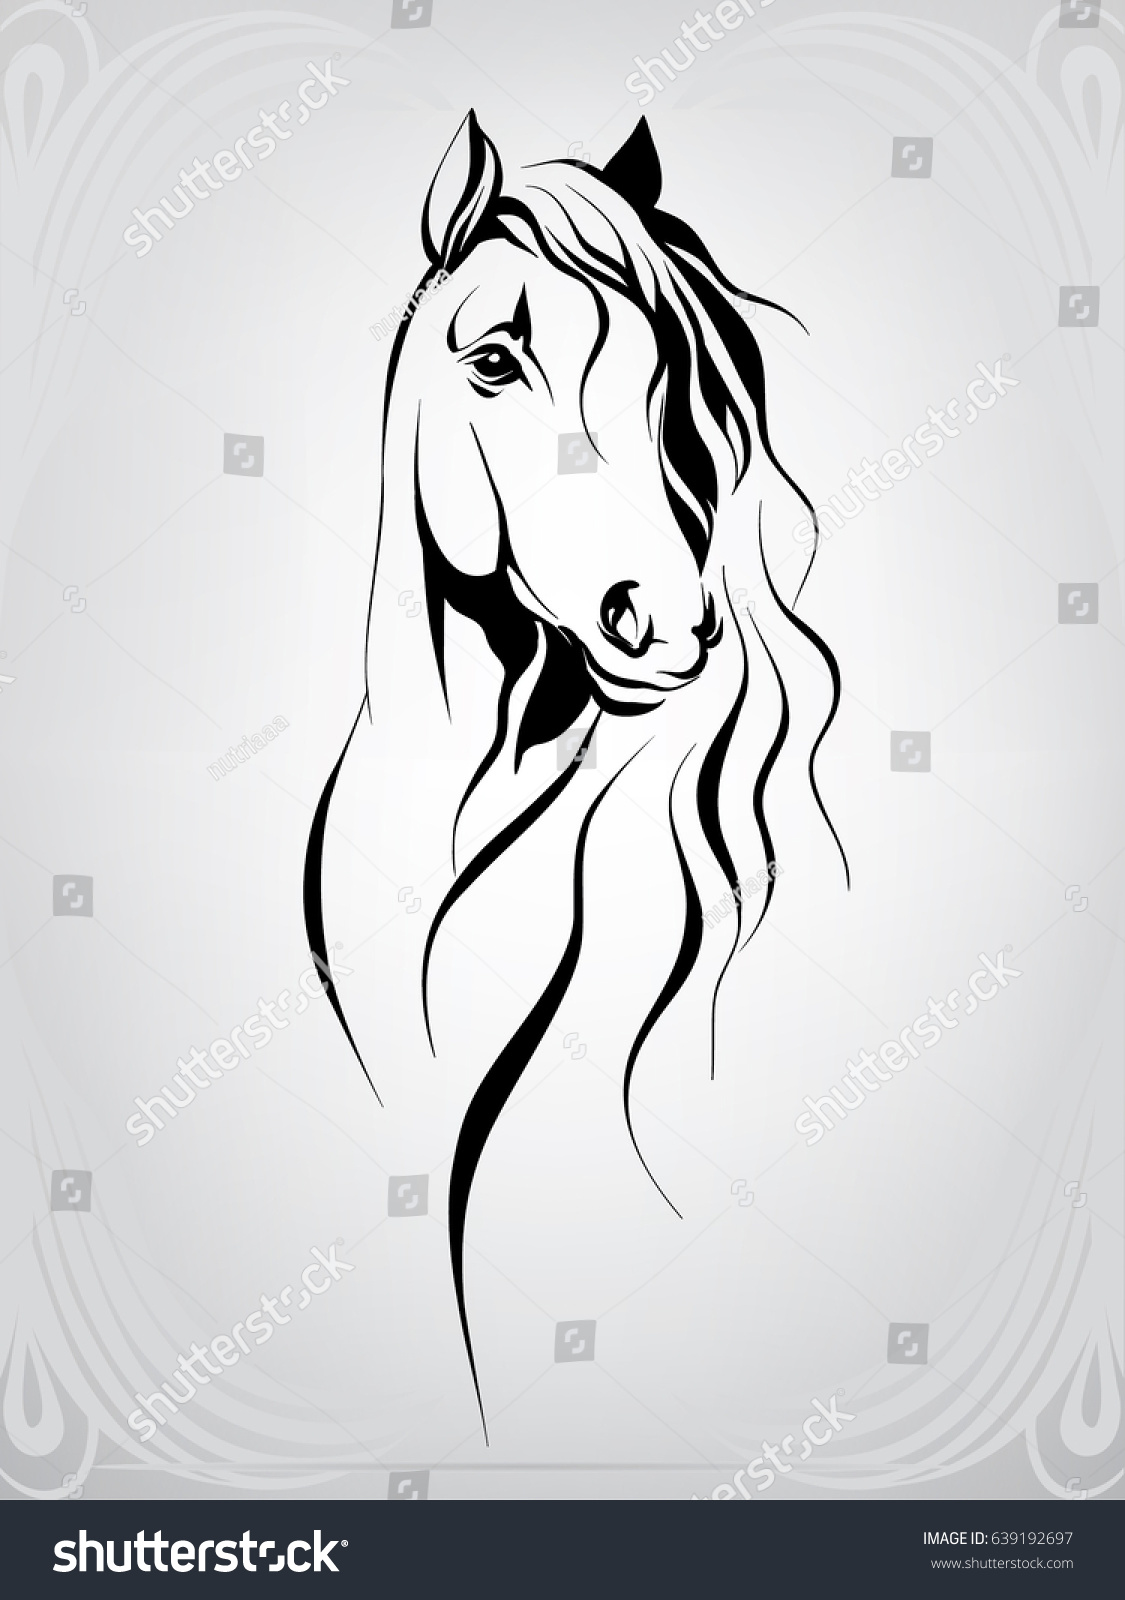 Download Vector Silhouette Horses Head Stock Vector 639192697 ...